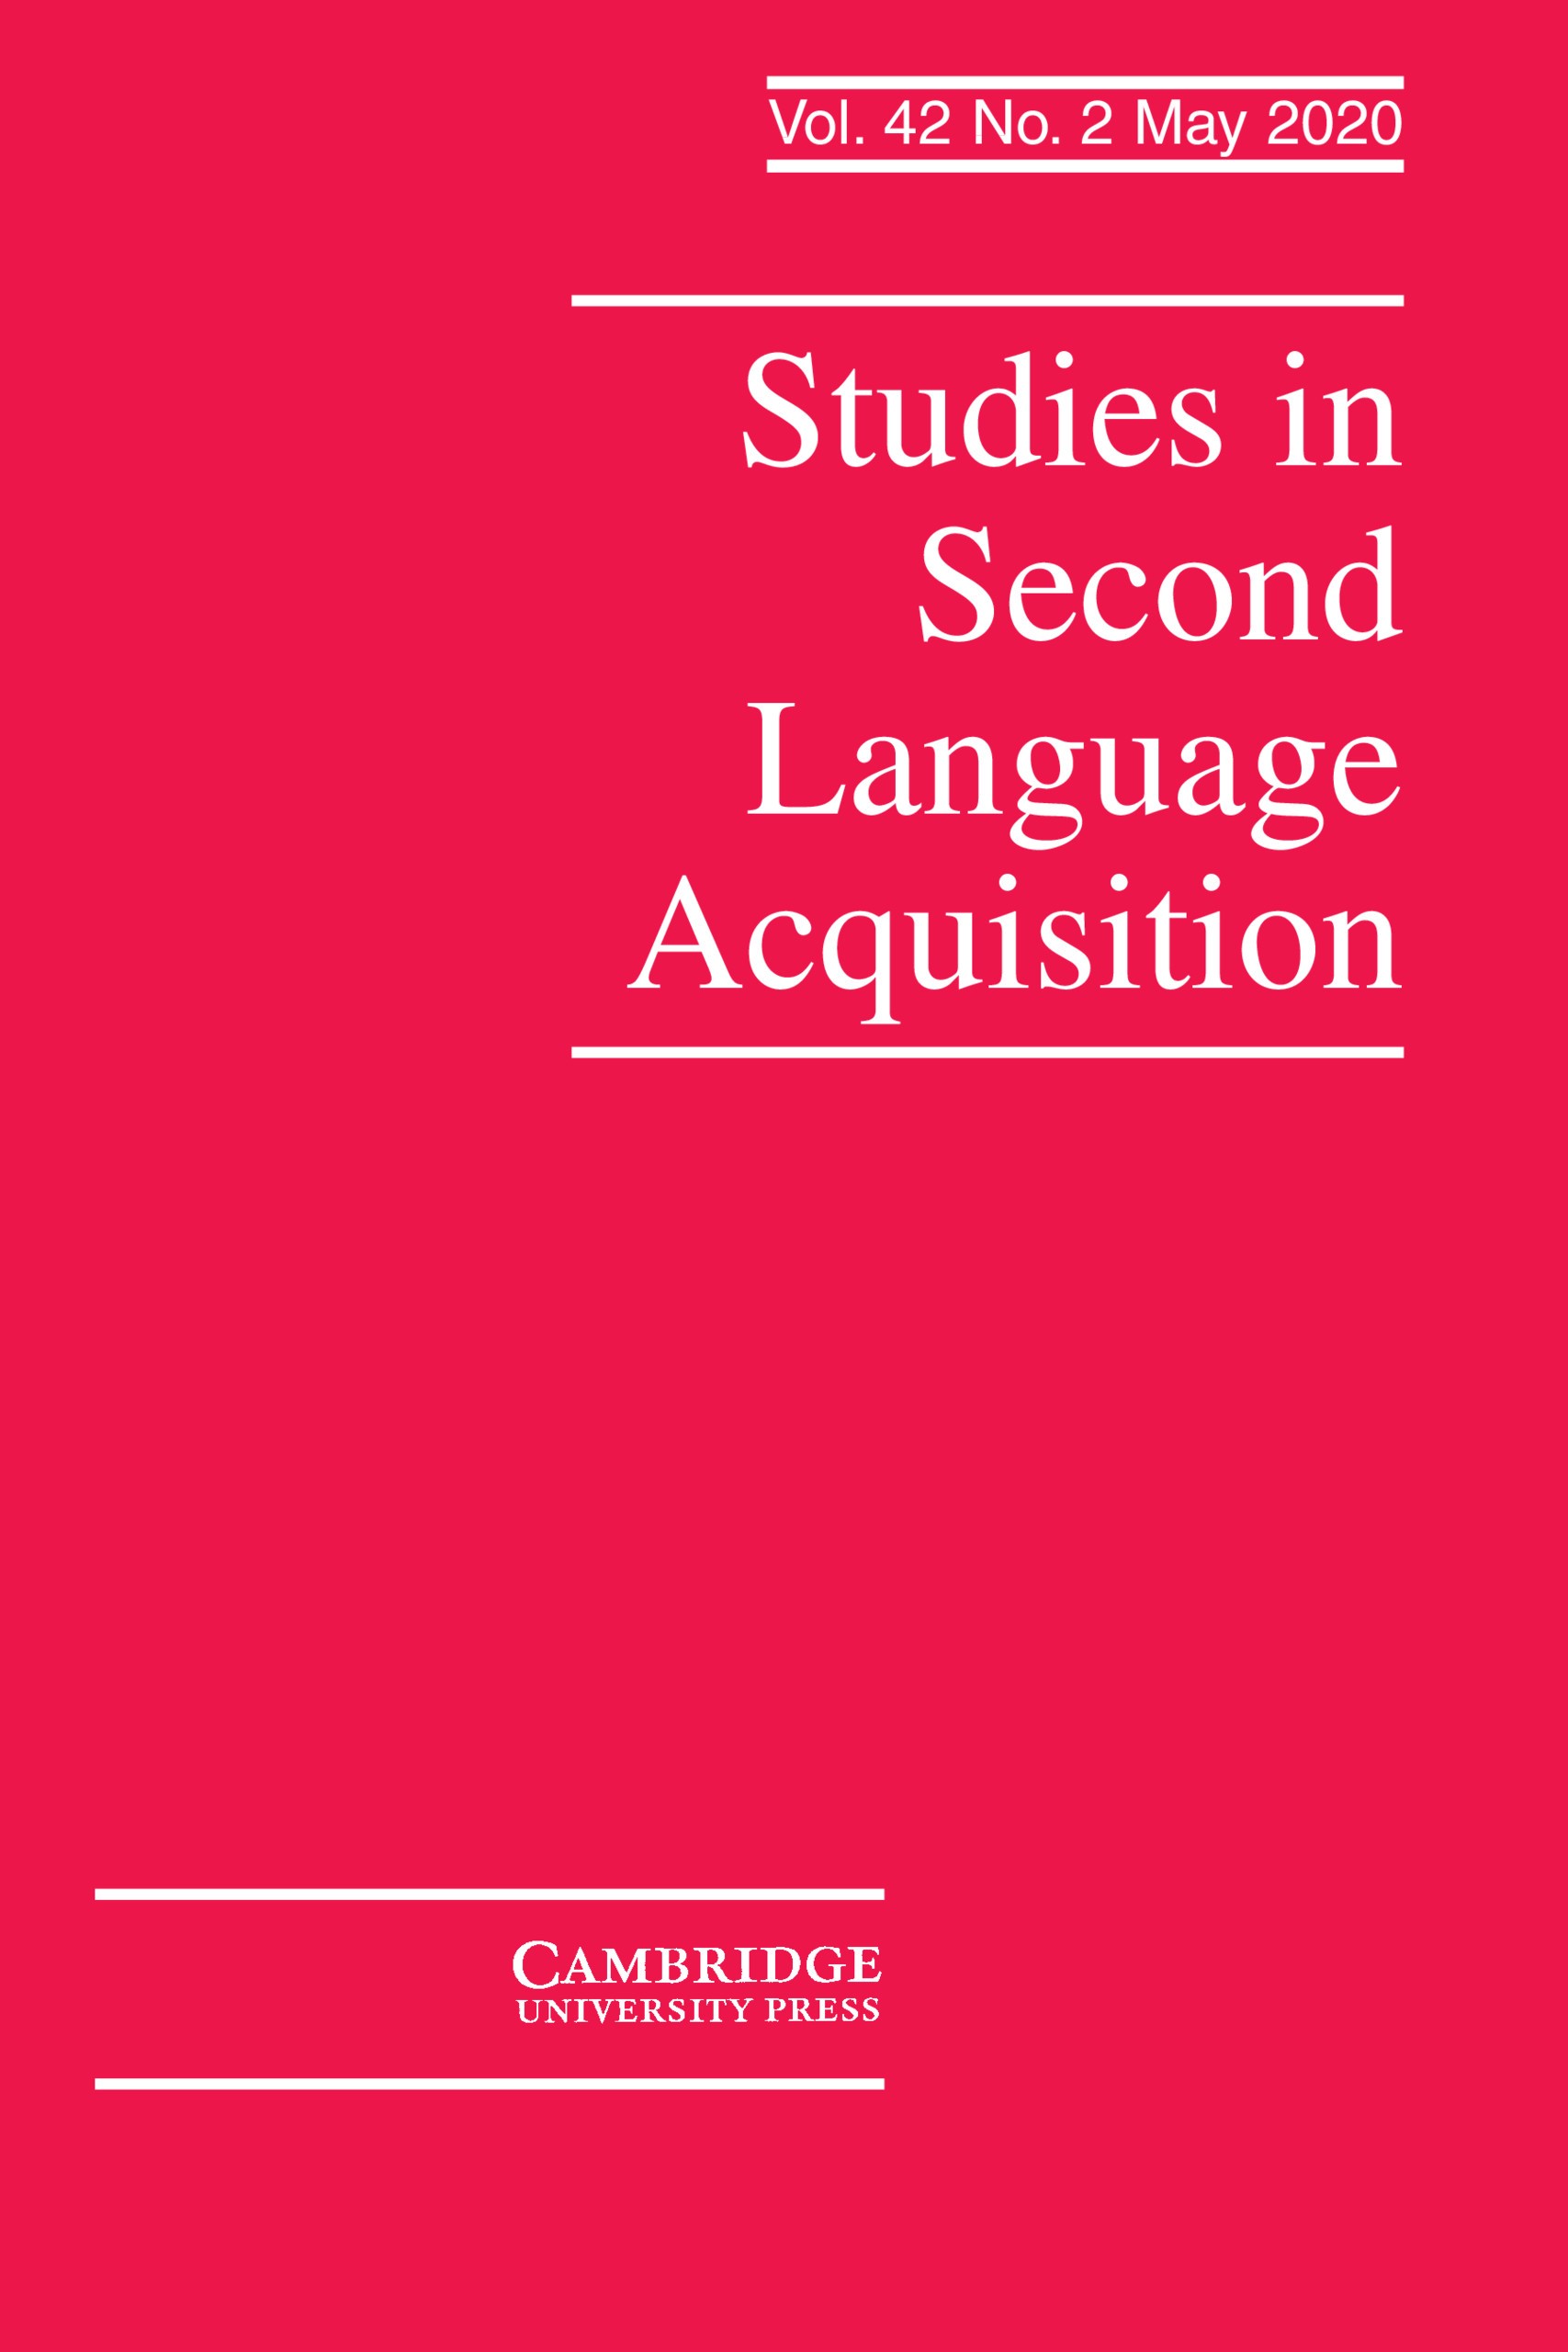 second language acquisition research articles